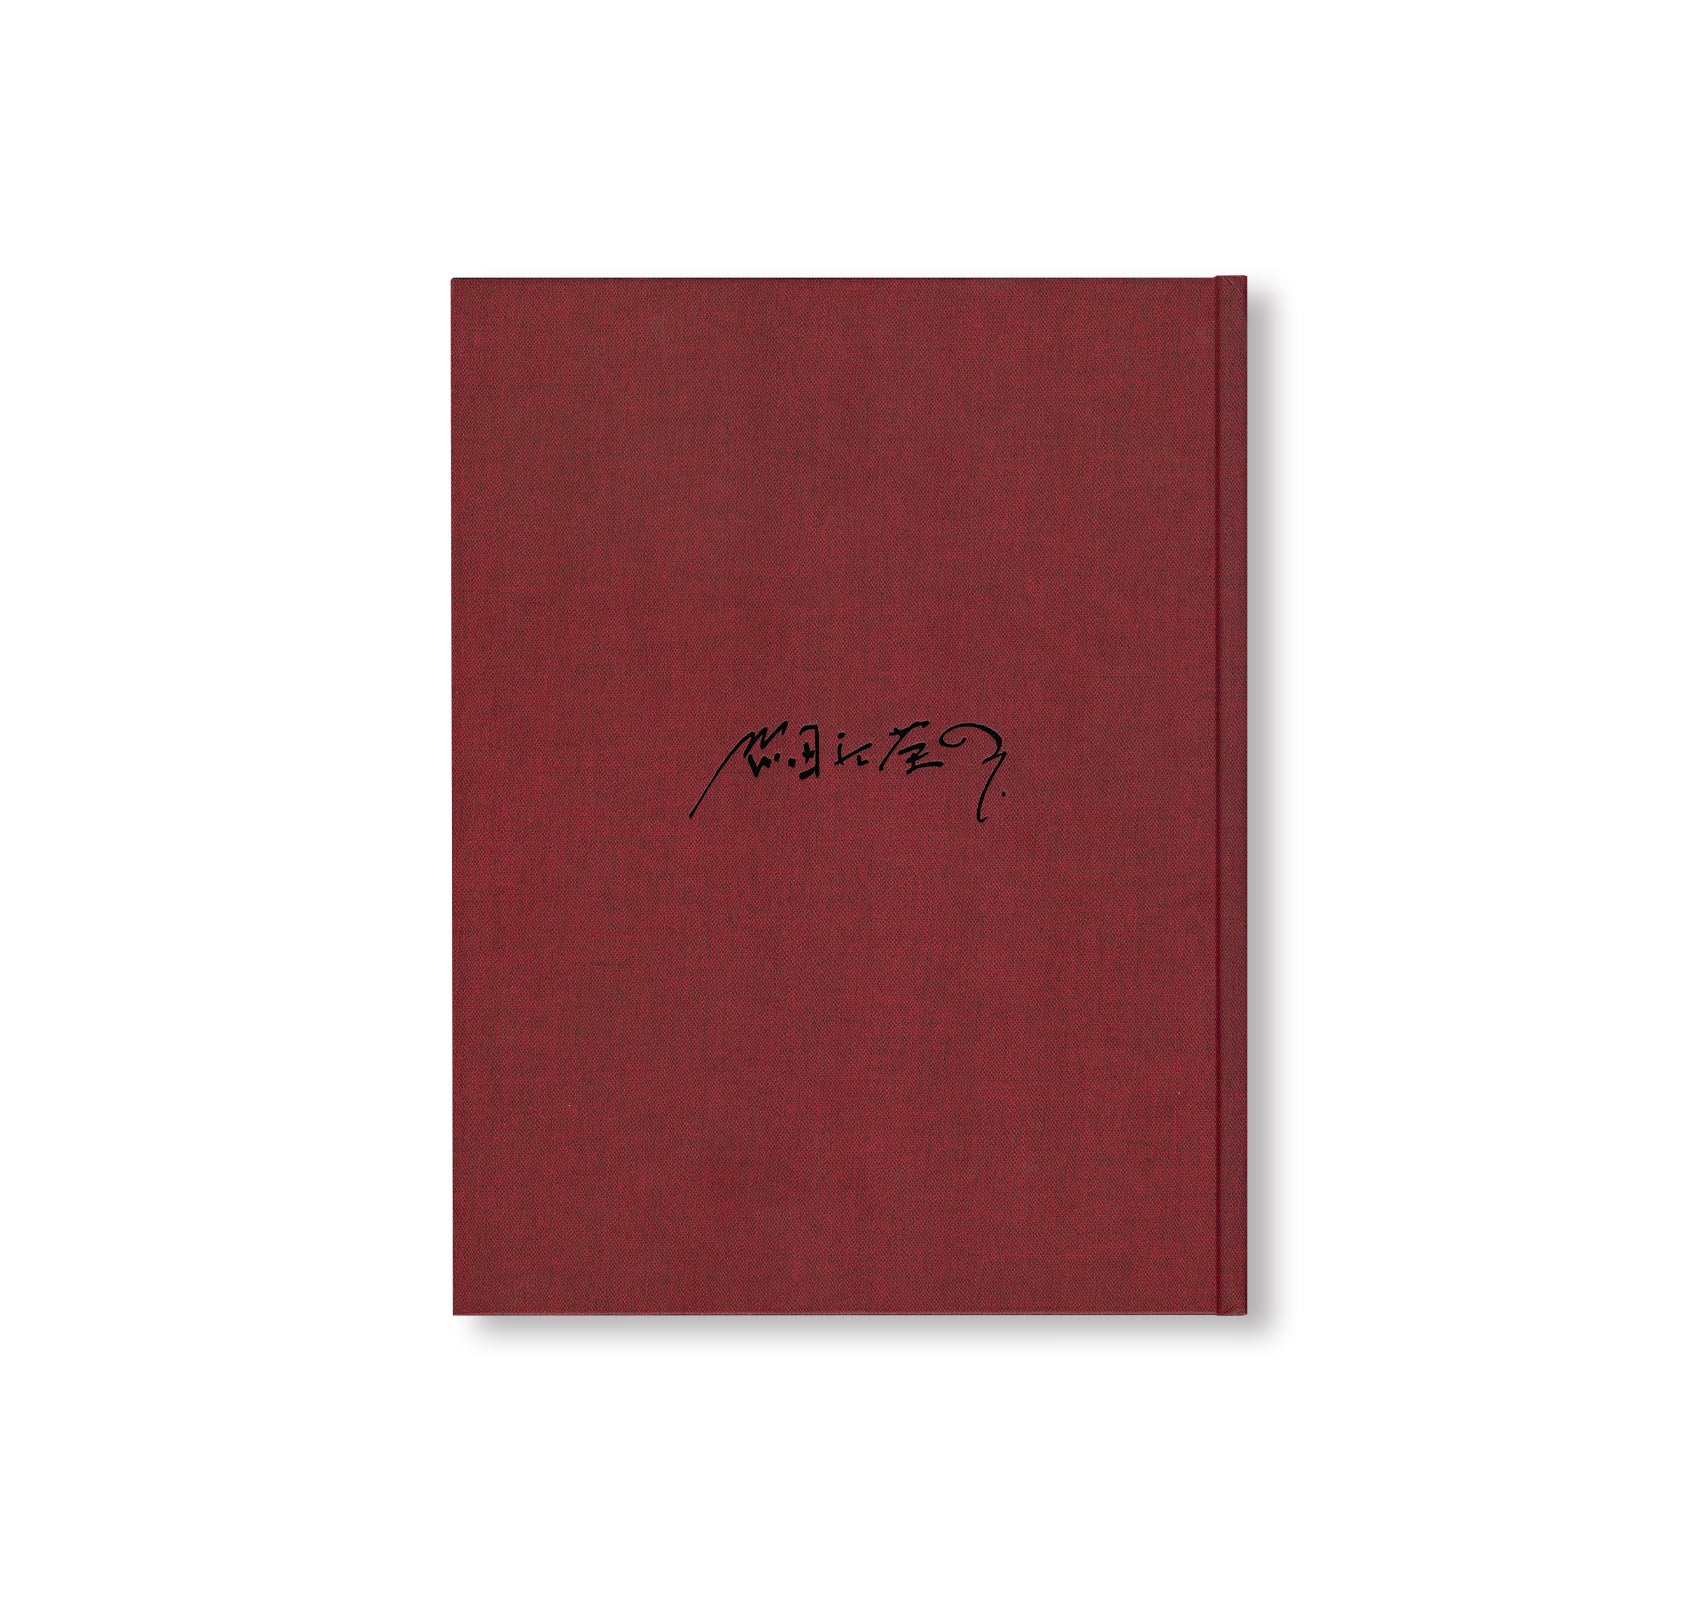 EIKOH HOSOE by Yasufumi Nakamori [JAPANESE EDITION]